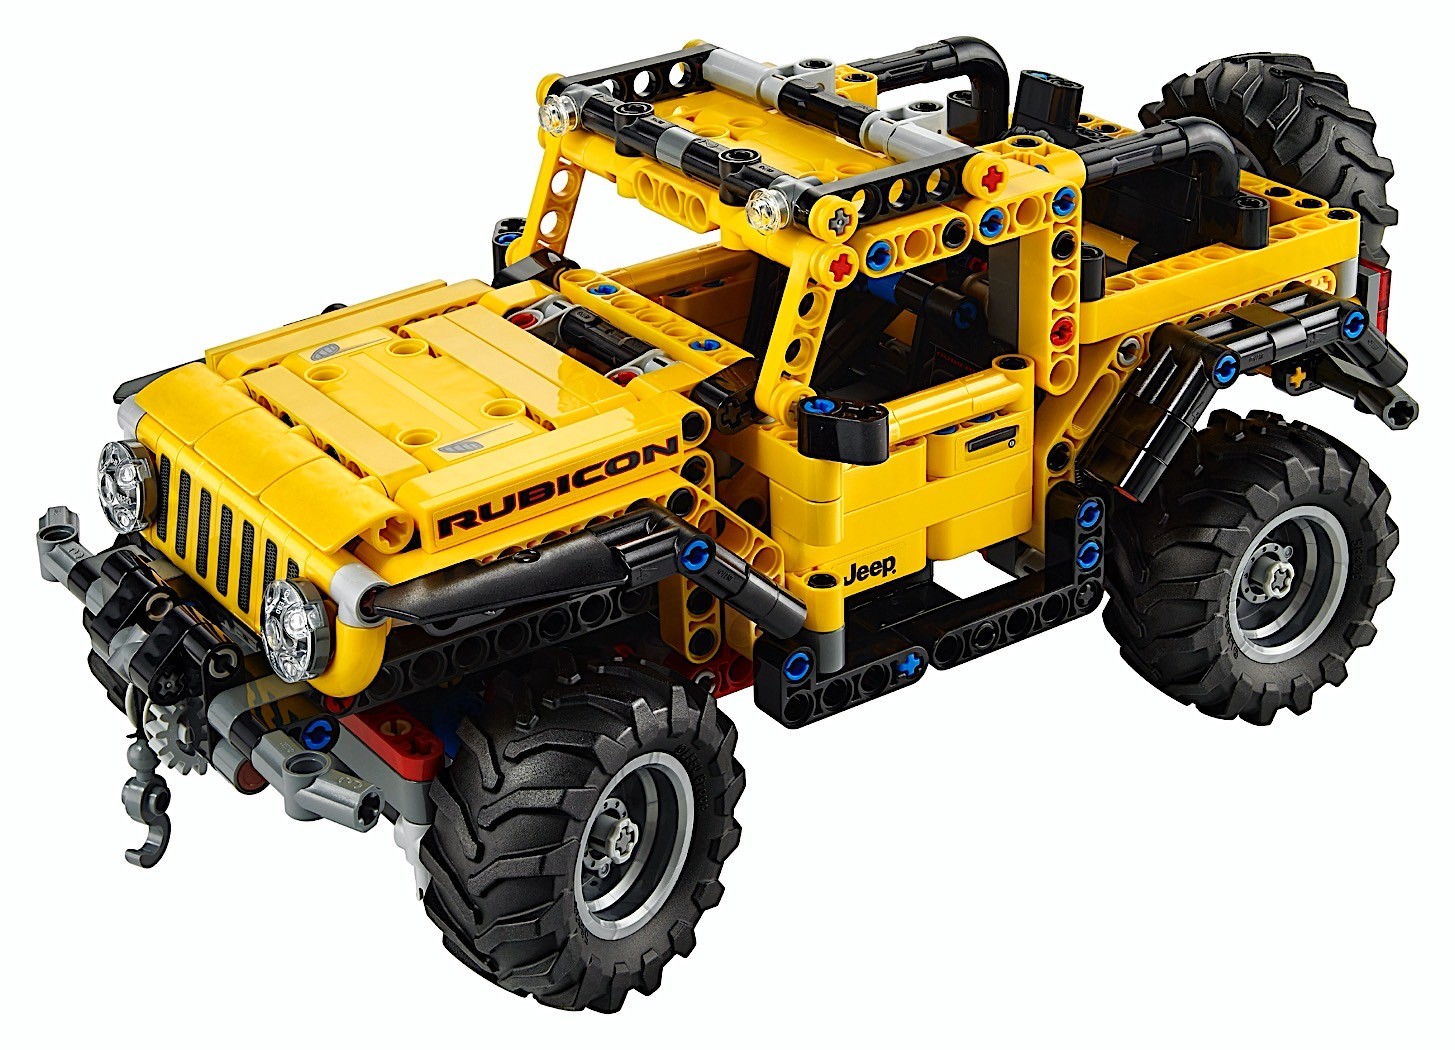 LEGO Nails Technic Jeep Wrangler Rubicon, Because It’s Square ...